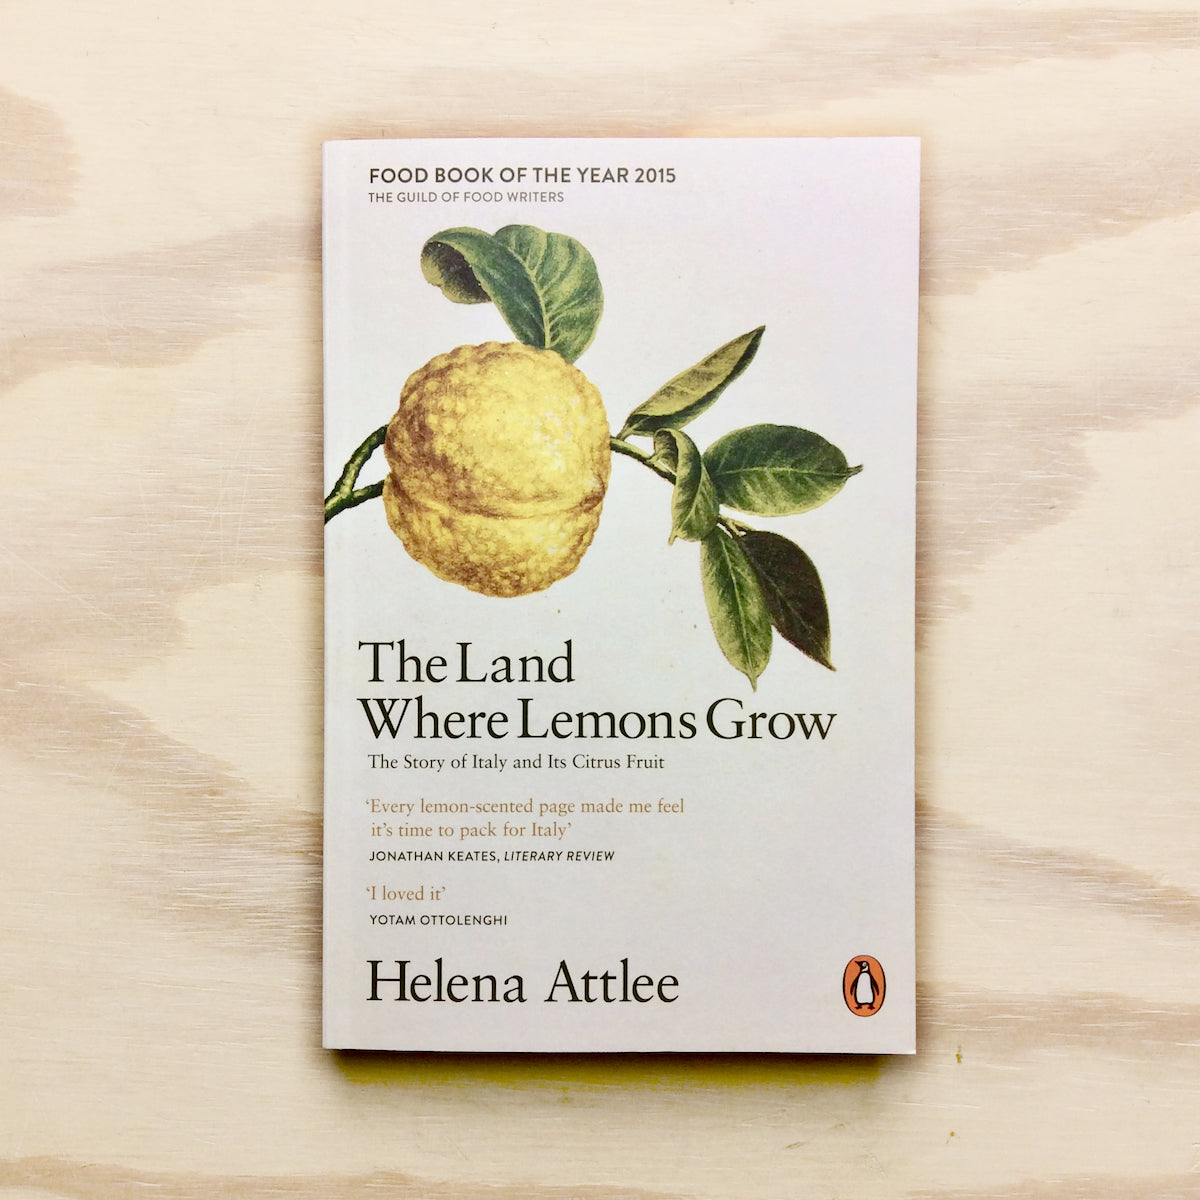 The land where lemons grow